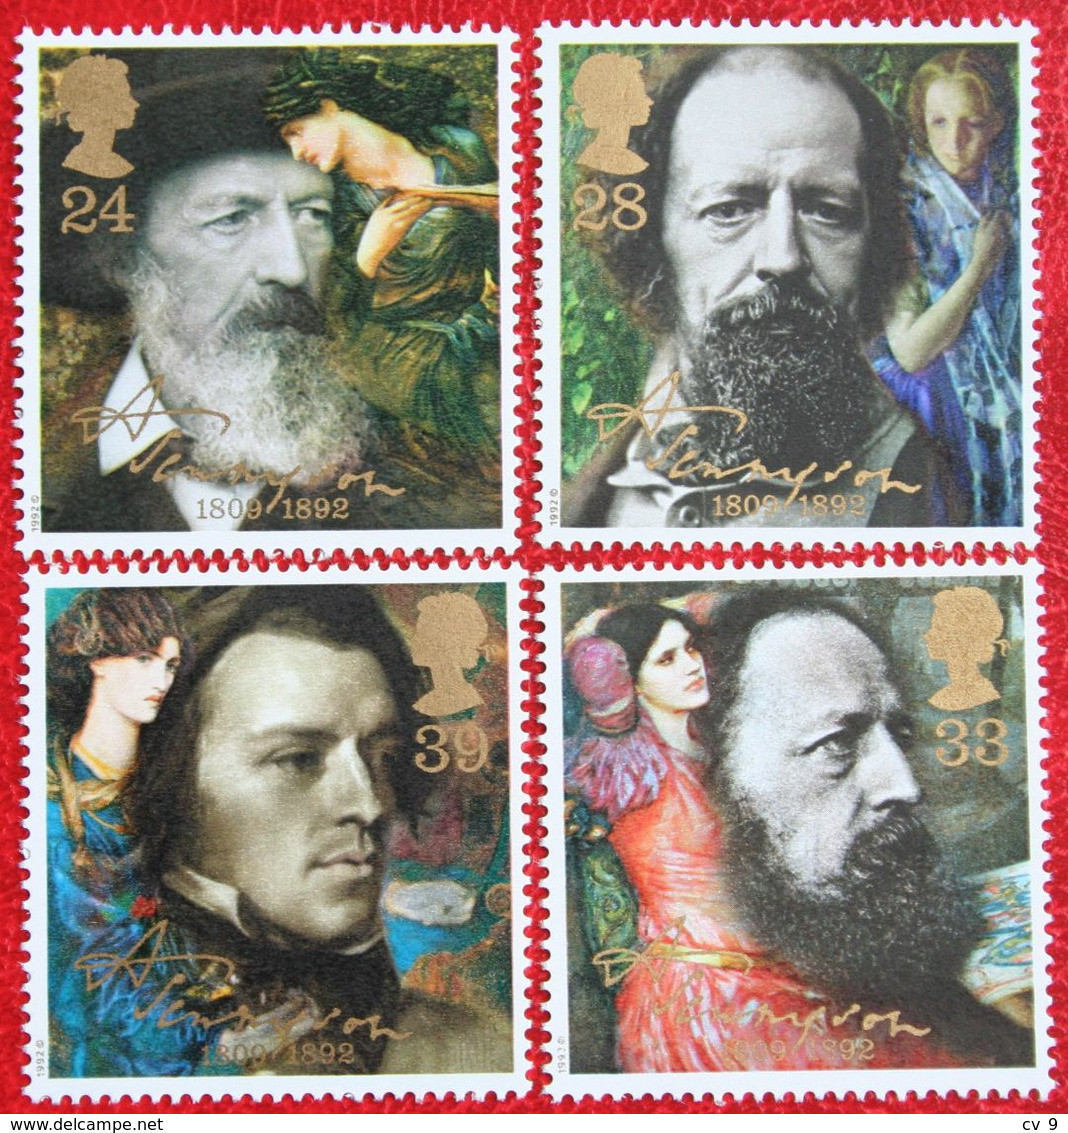 PORTRAITS ILLUSTRATIONS FOR POEMS TENNYSON (Mi 1392-1395) 1992 POSTFRIS MNH ** ENGLAND GRANDE-BRETAGNE GB GREAT BRITAIN - Unused Stamps